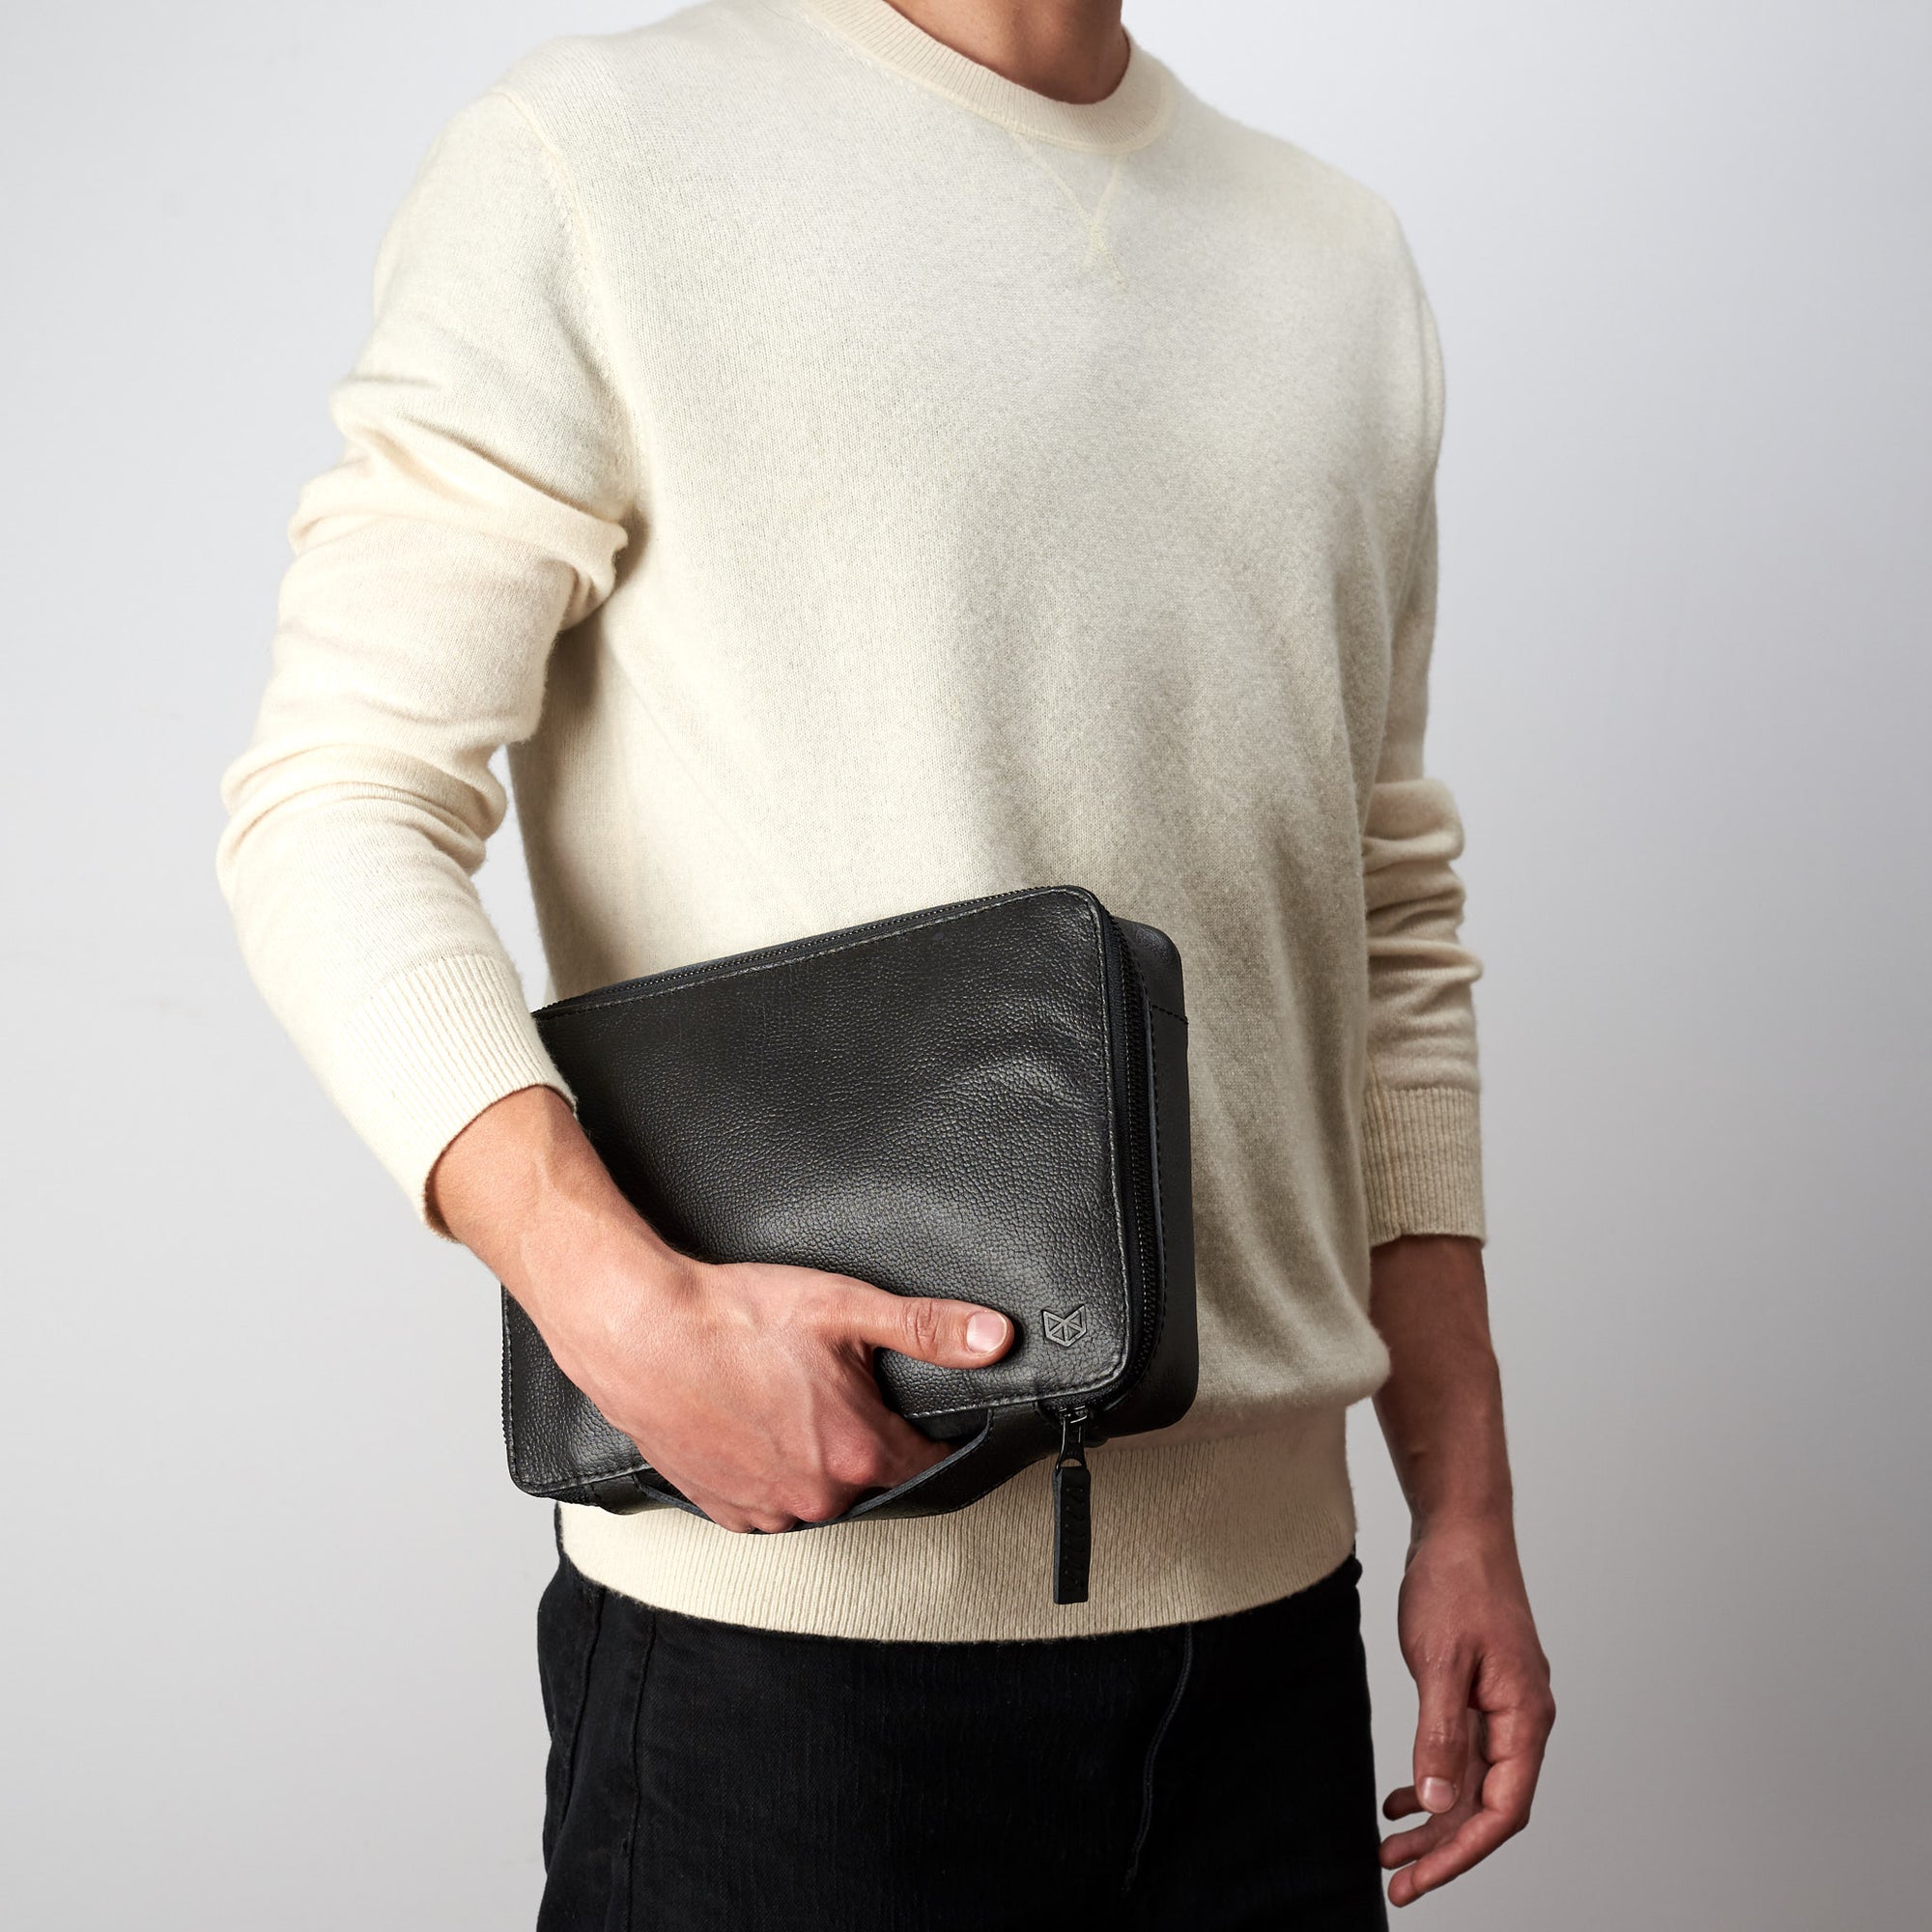 Black mens edc bag by Capra Leather. Fits Apple iPad Air